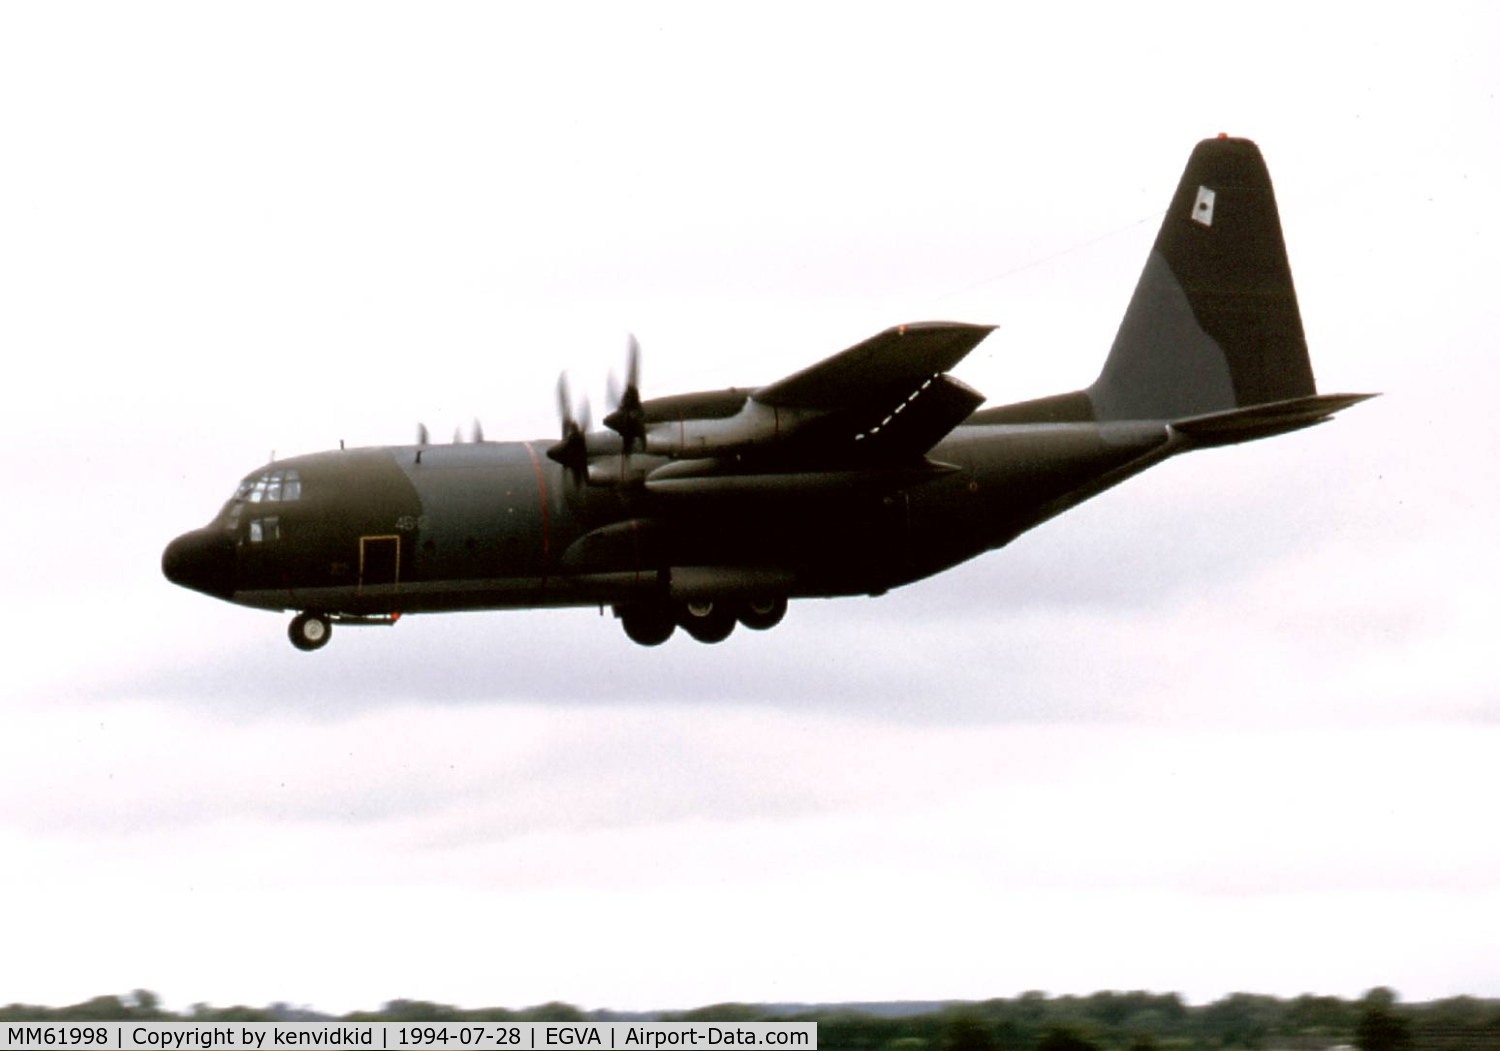 MM61998, 1973 Lockheed C-130H Hercules C/N 382-4494, Italian Air Force arriving for RIAT.